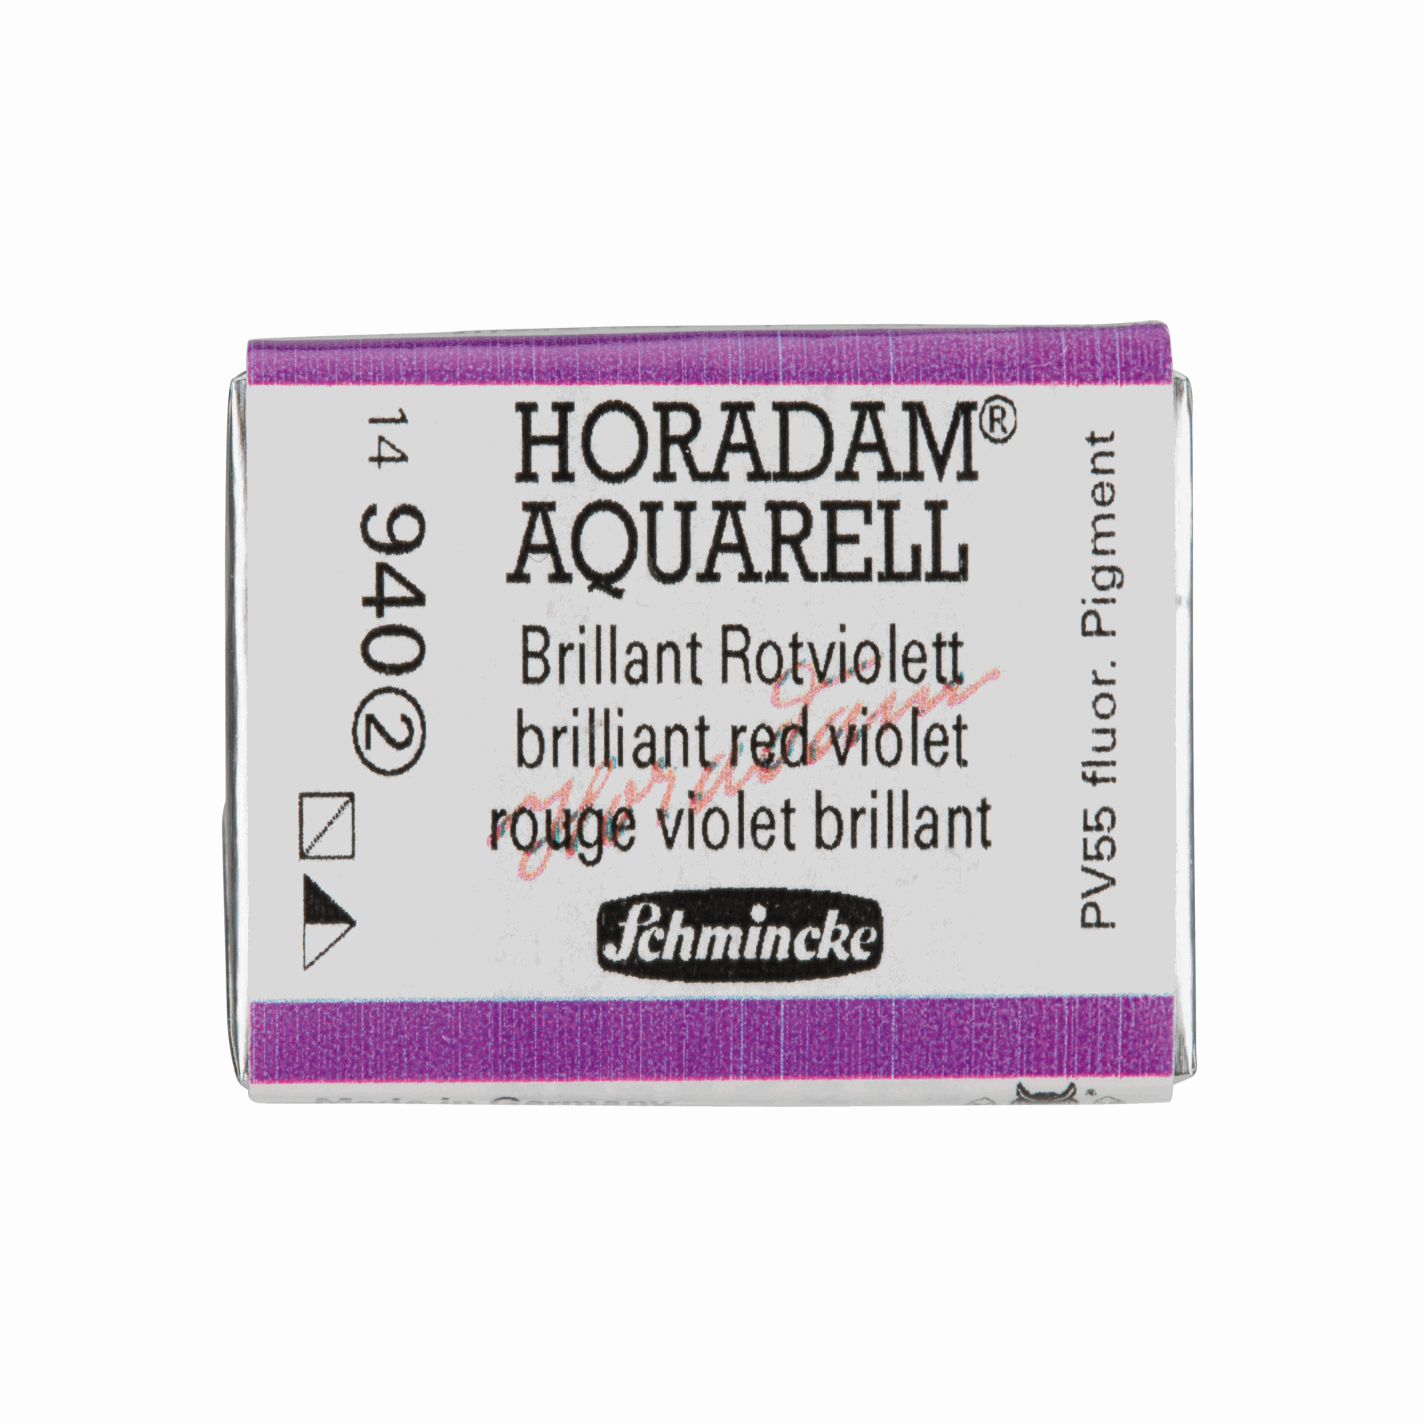 Schmincke Horadam Aquarell pans 1/1 pan Brilliant Red Violet